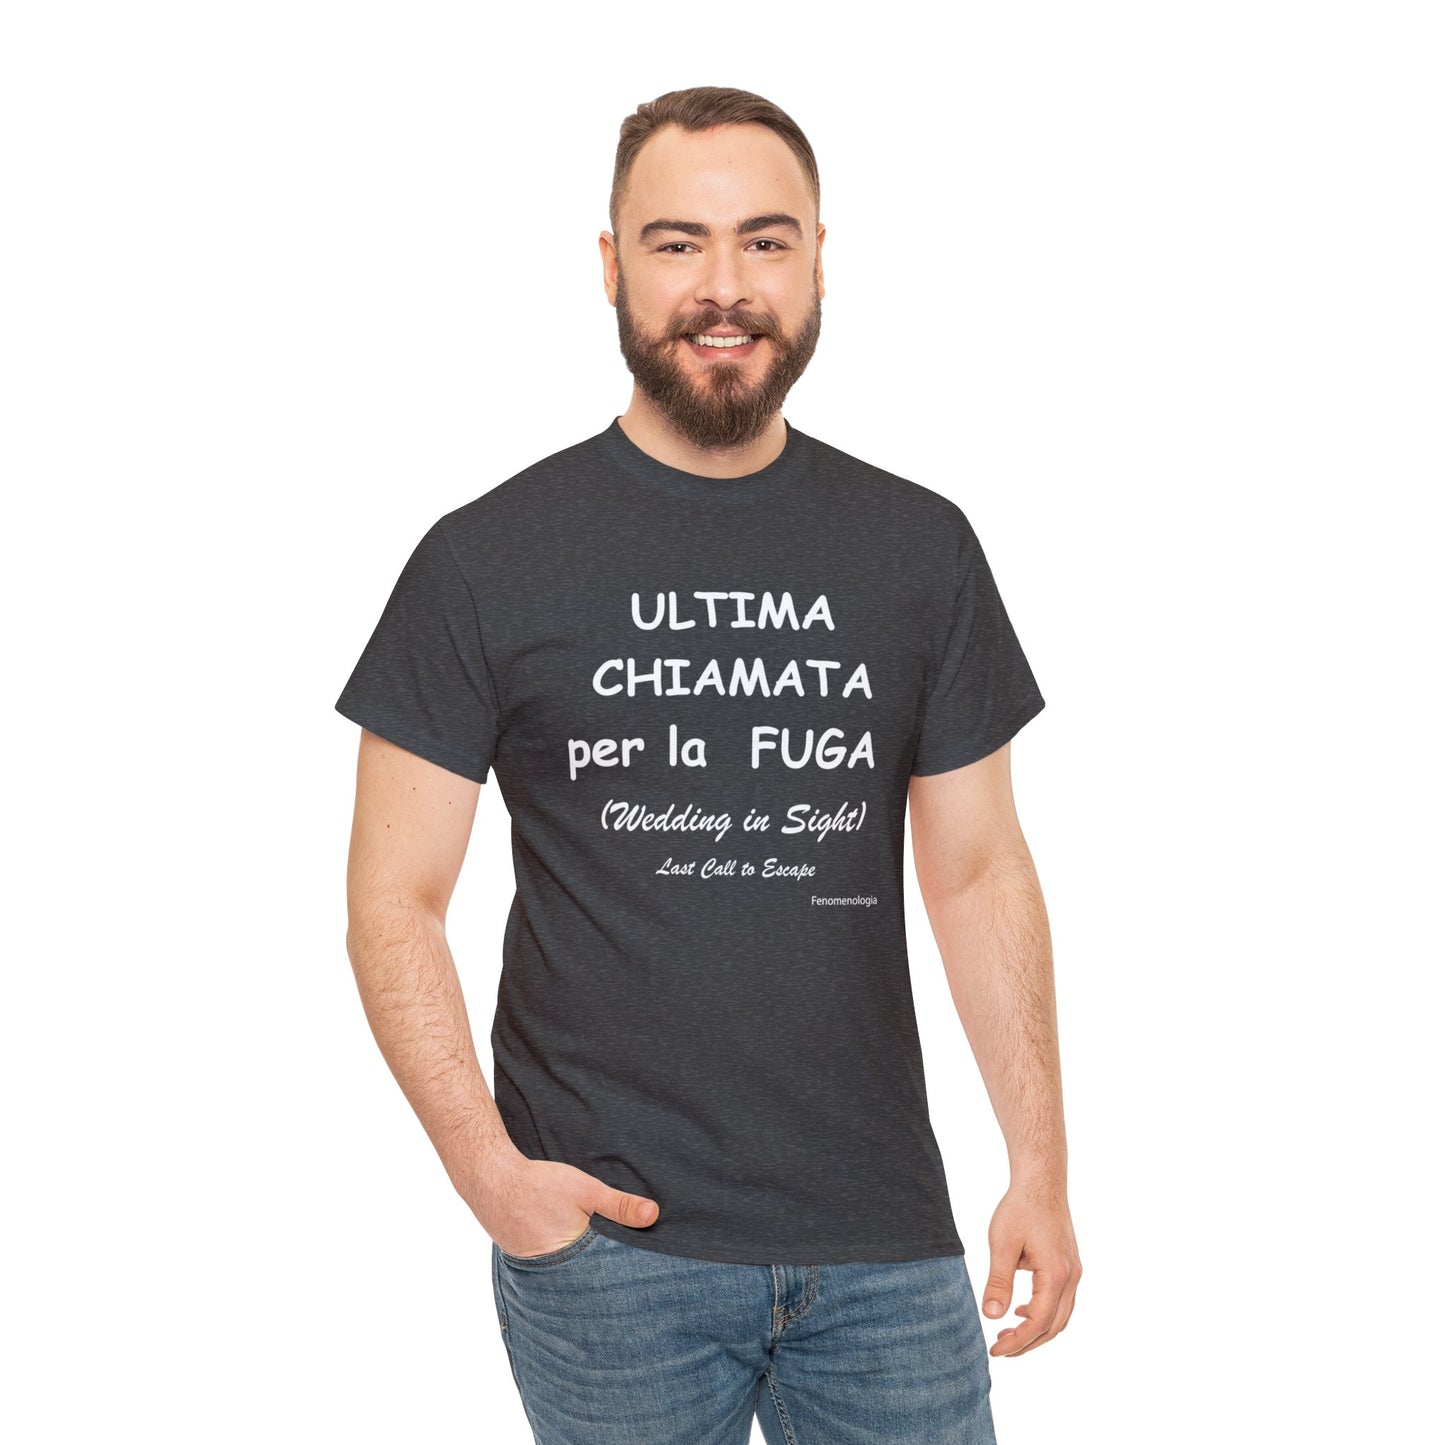 ULTIMA CHIAMATA per la  FUGA Men T-Shirt - Fenomenologia Shop